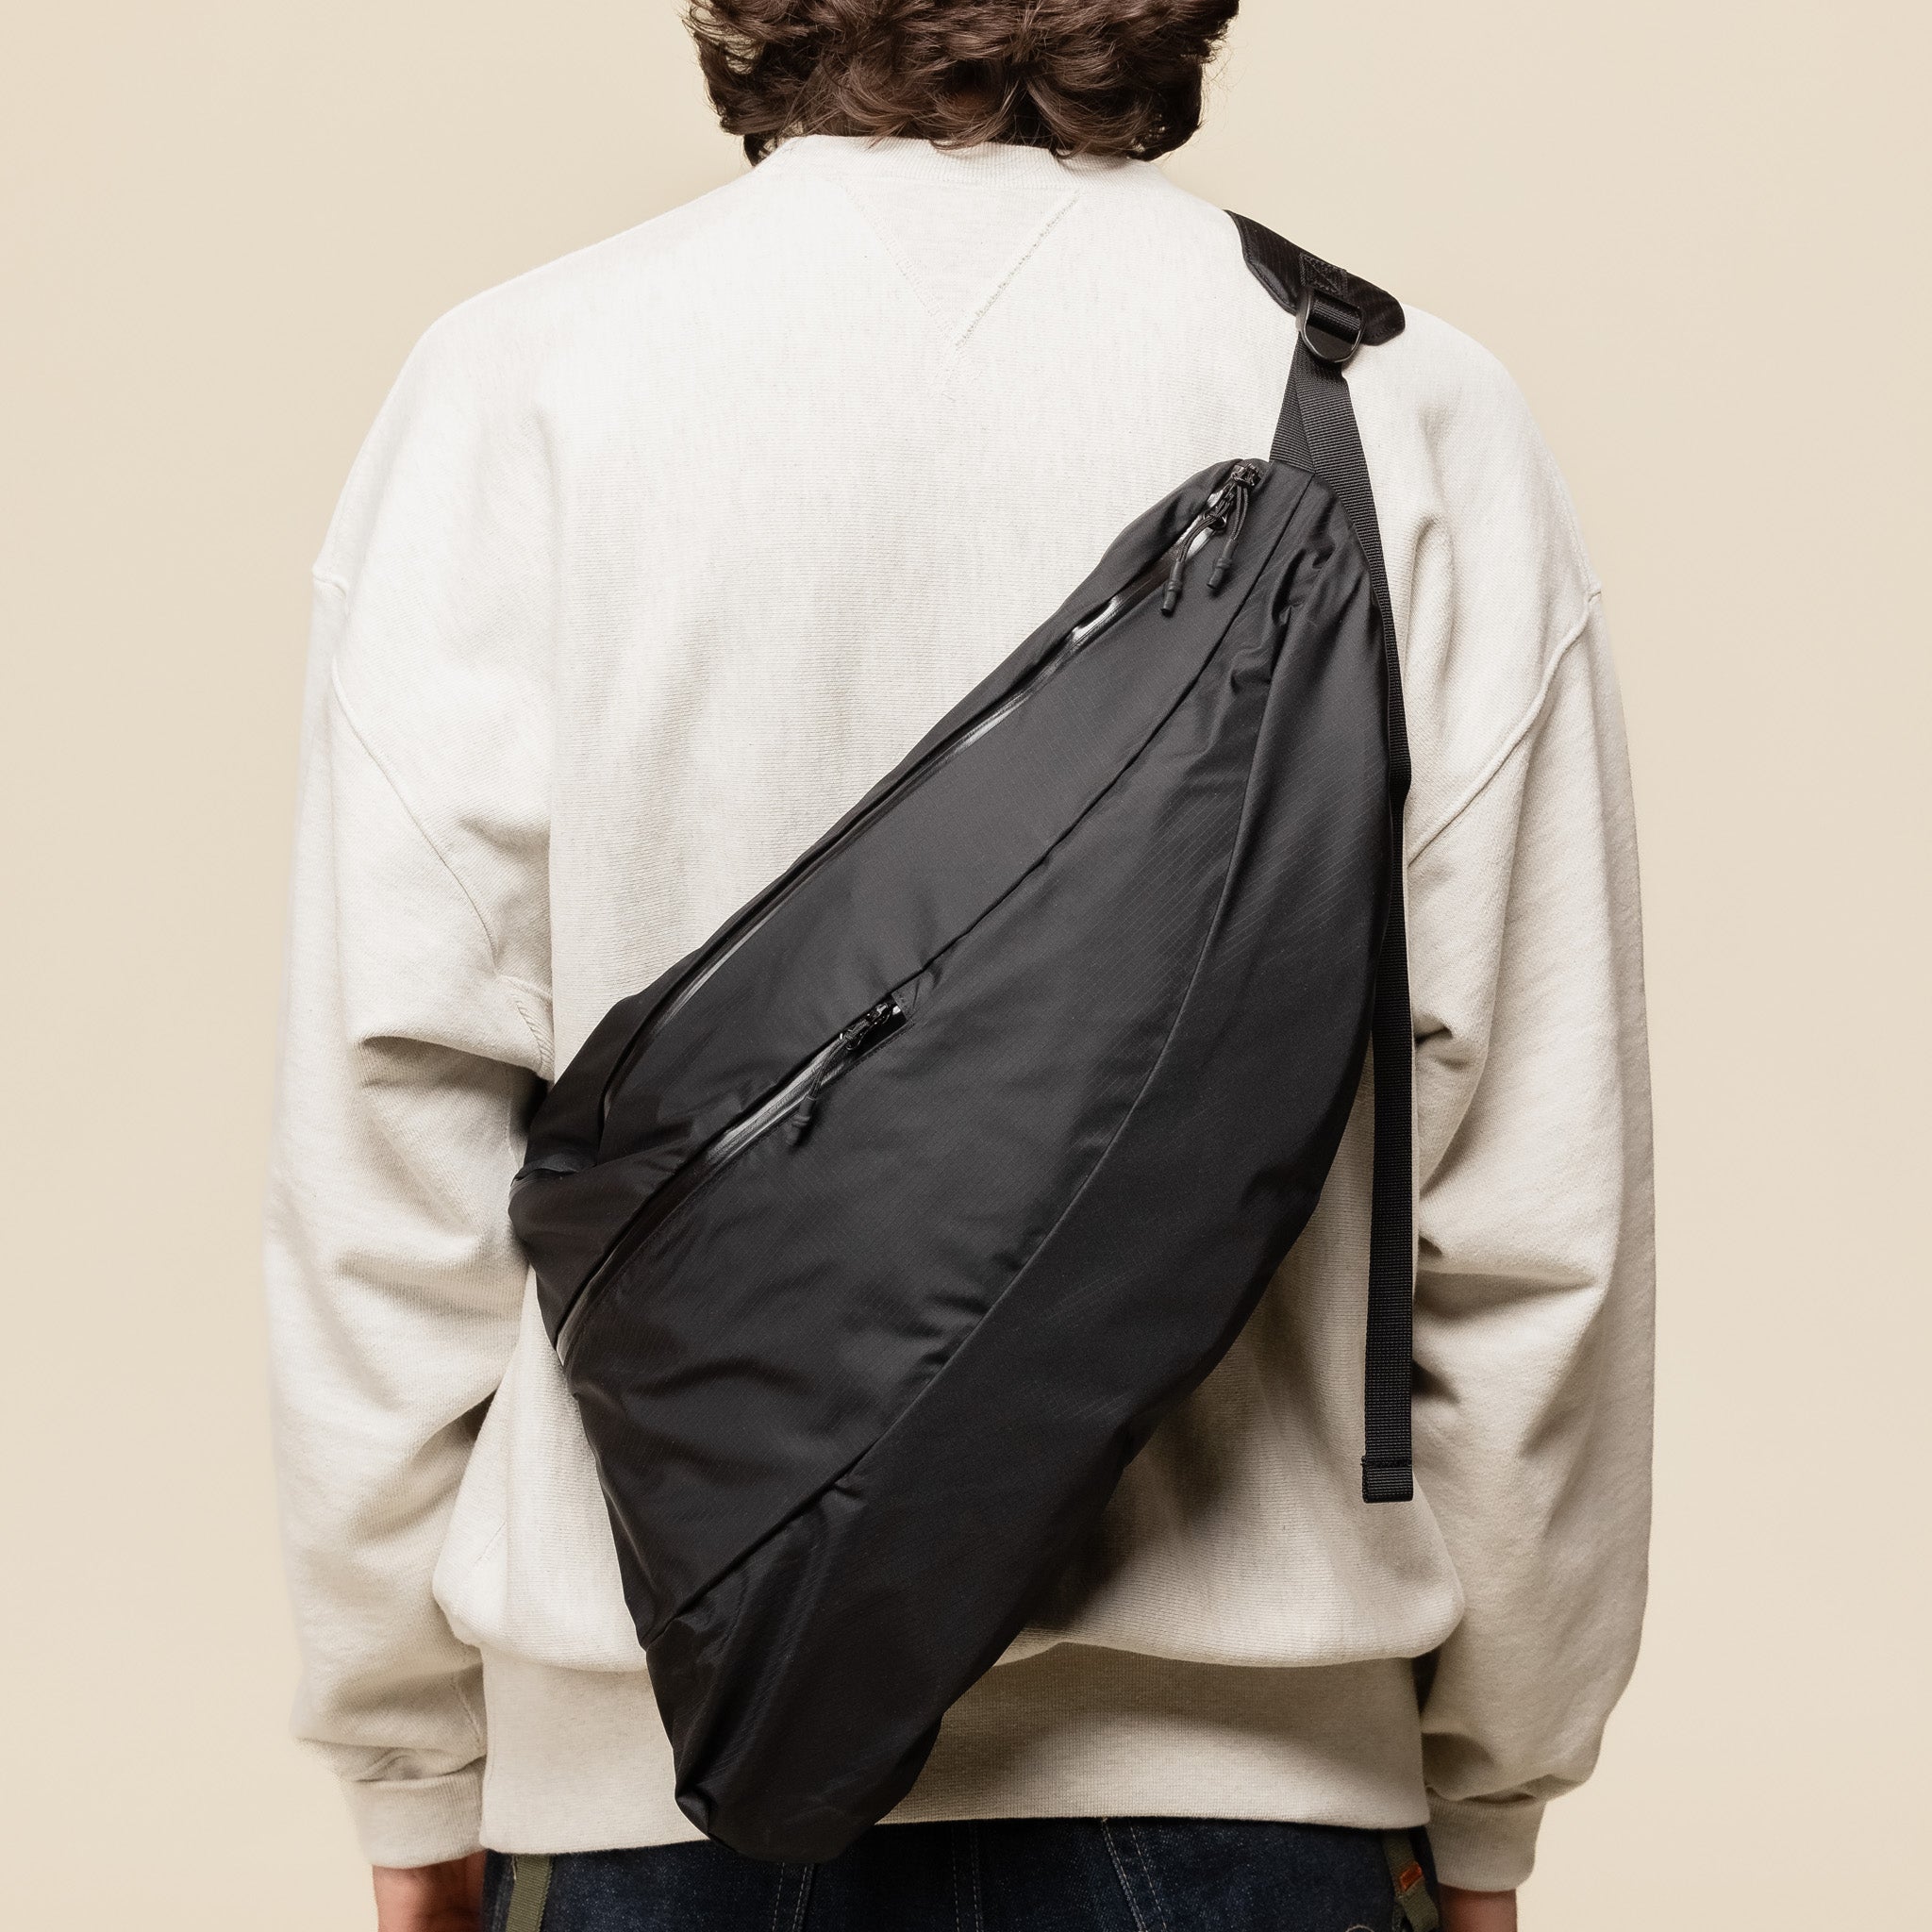 CAYL "Climb As You Love" - Archivépke Wrap Shoulder Bag - Black